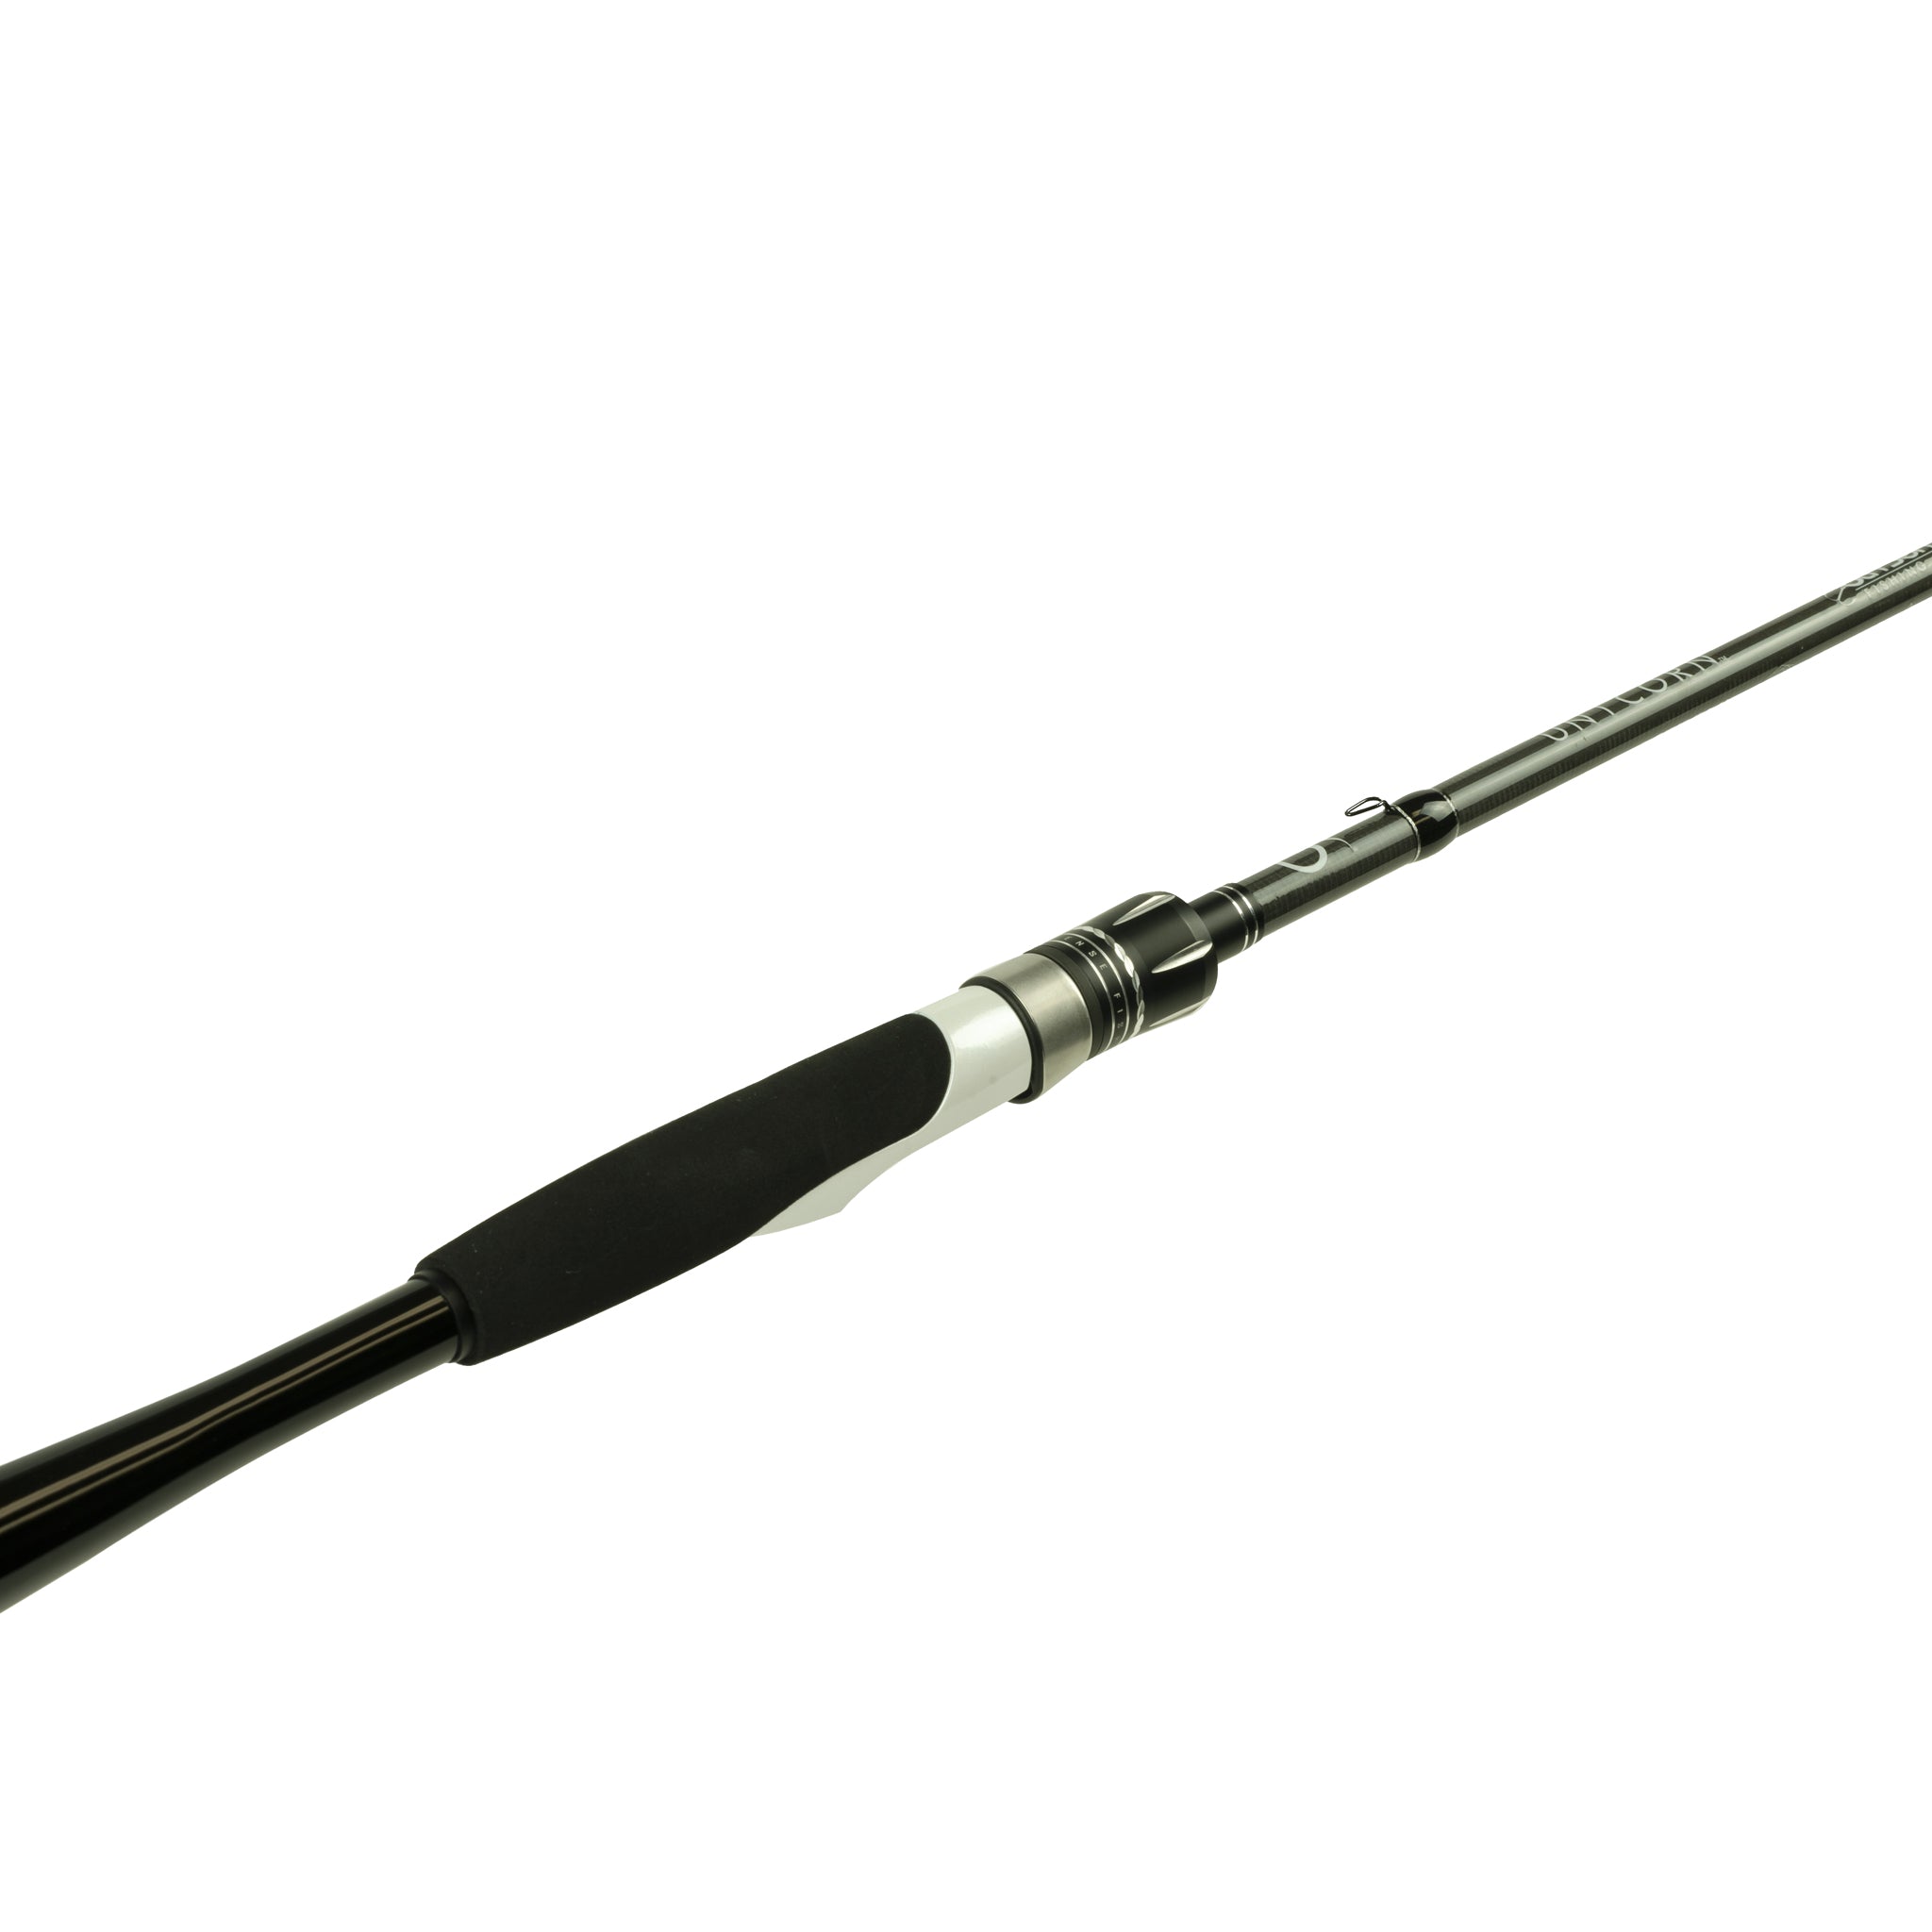 6th Sense Unicorn Rods 7'2 Medium-Light/Fast (Spinning Rod)